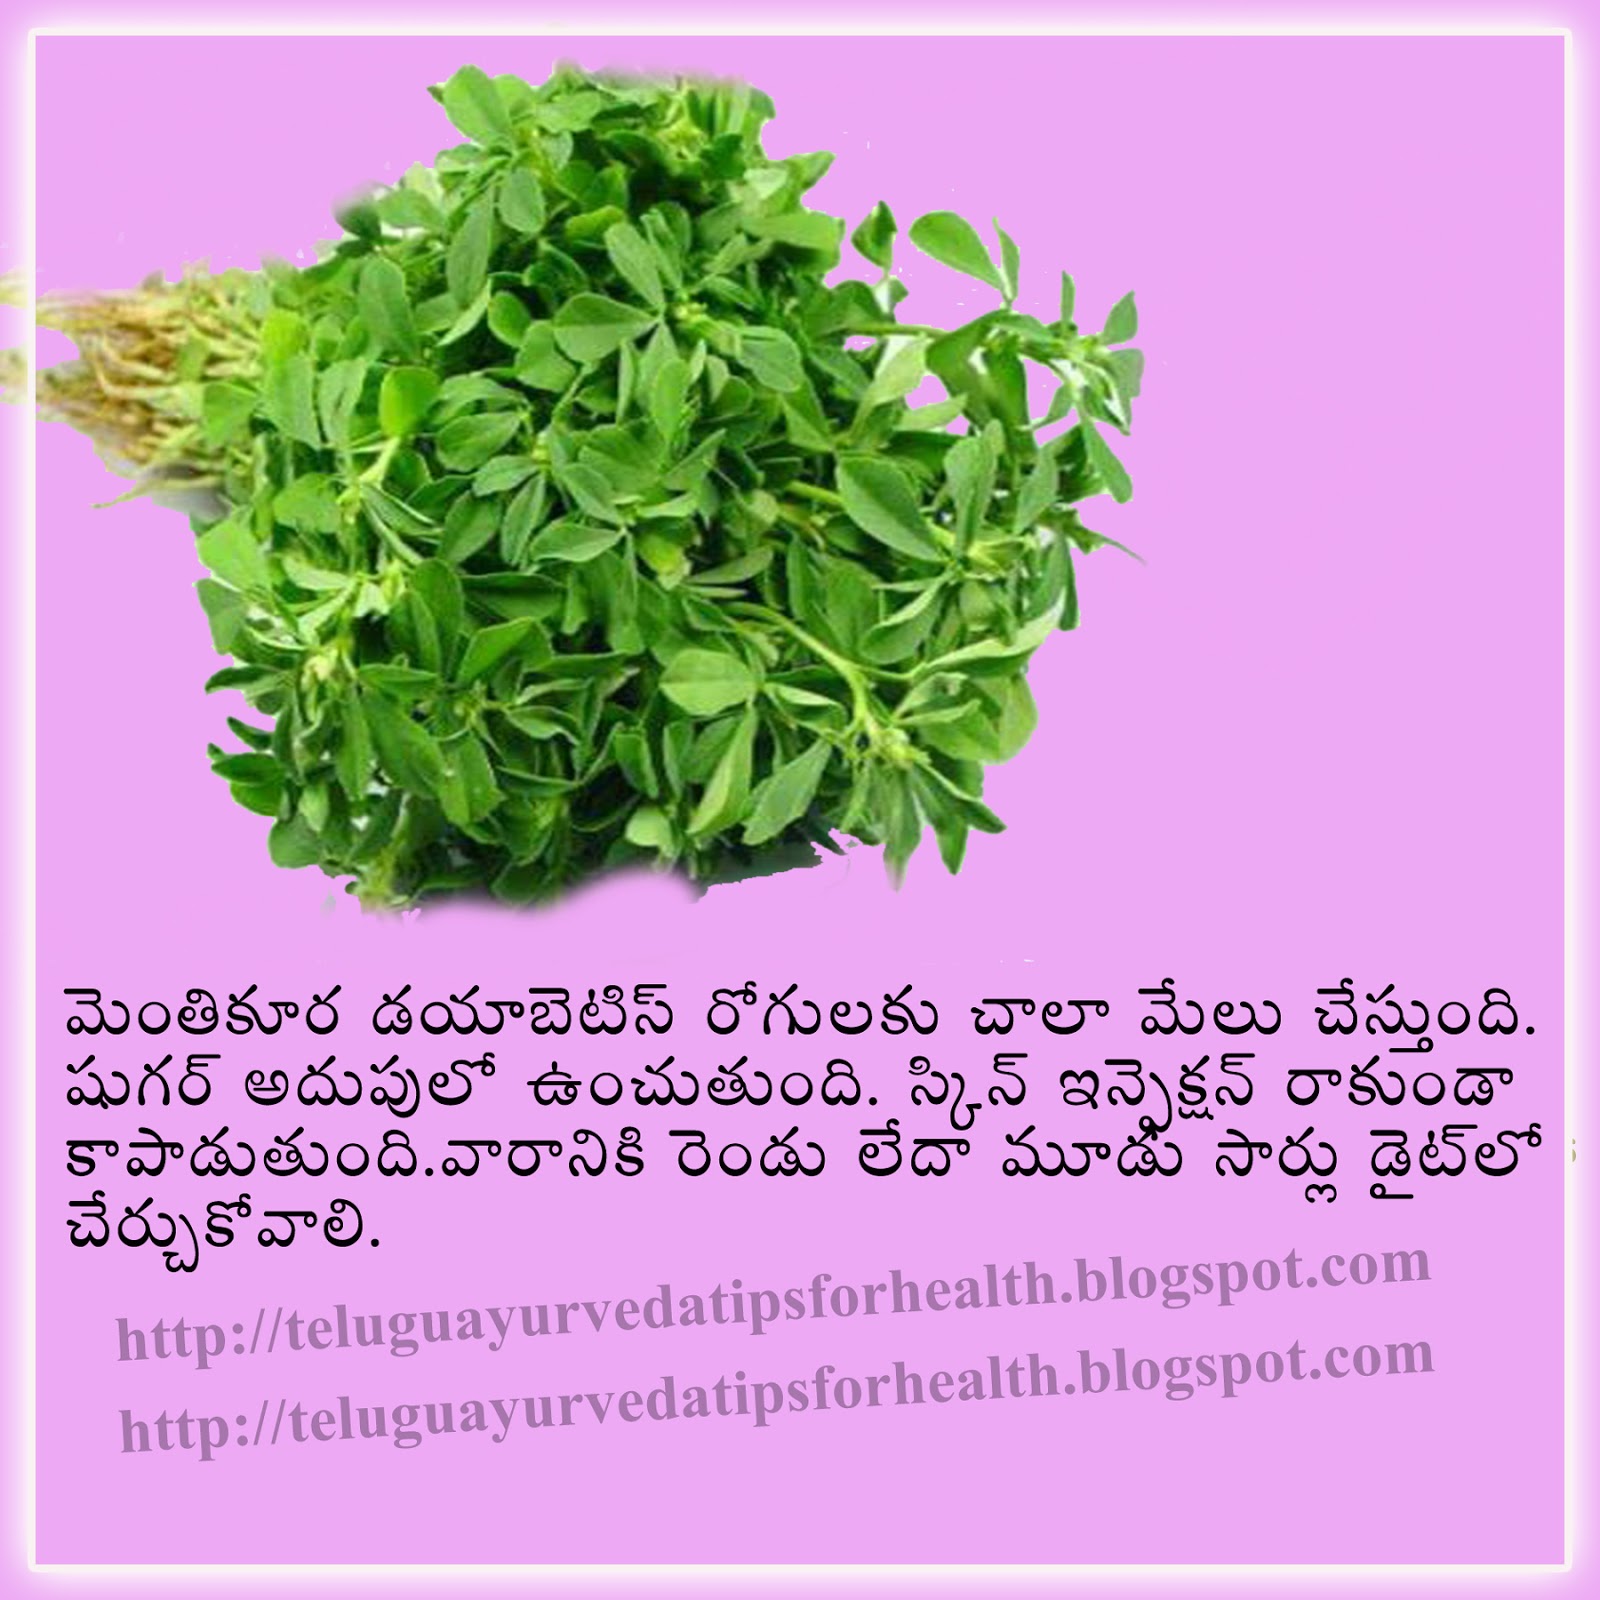 Telugu health tips videos download